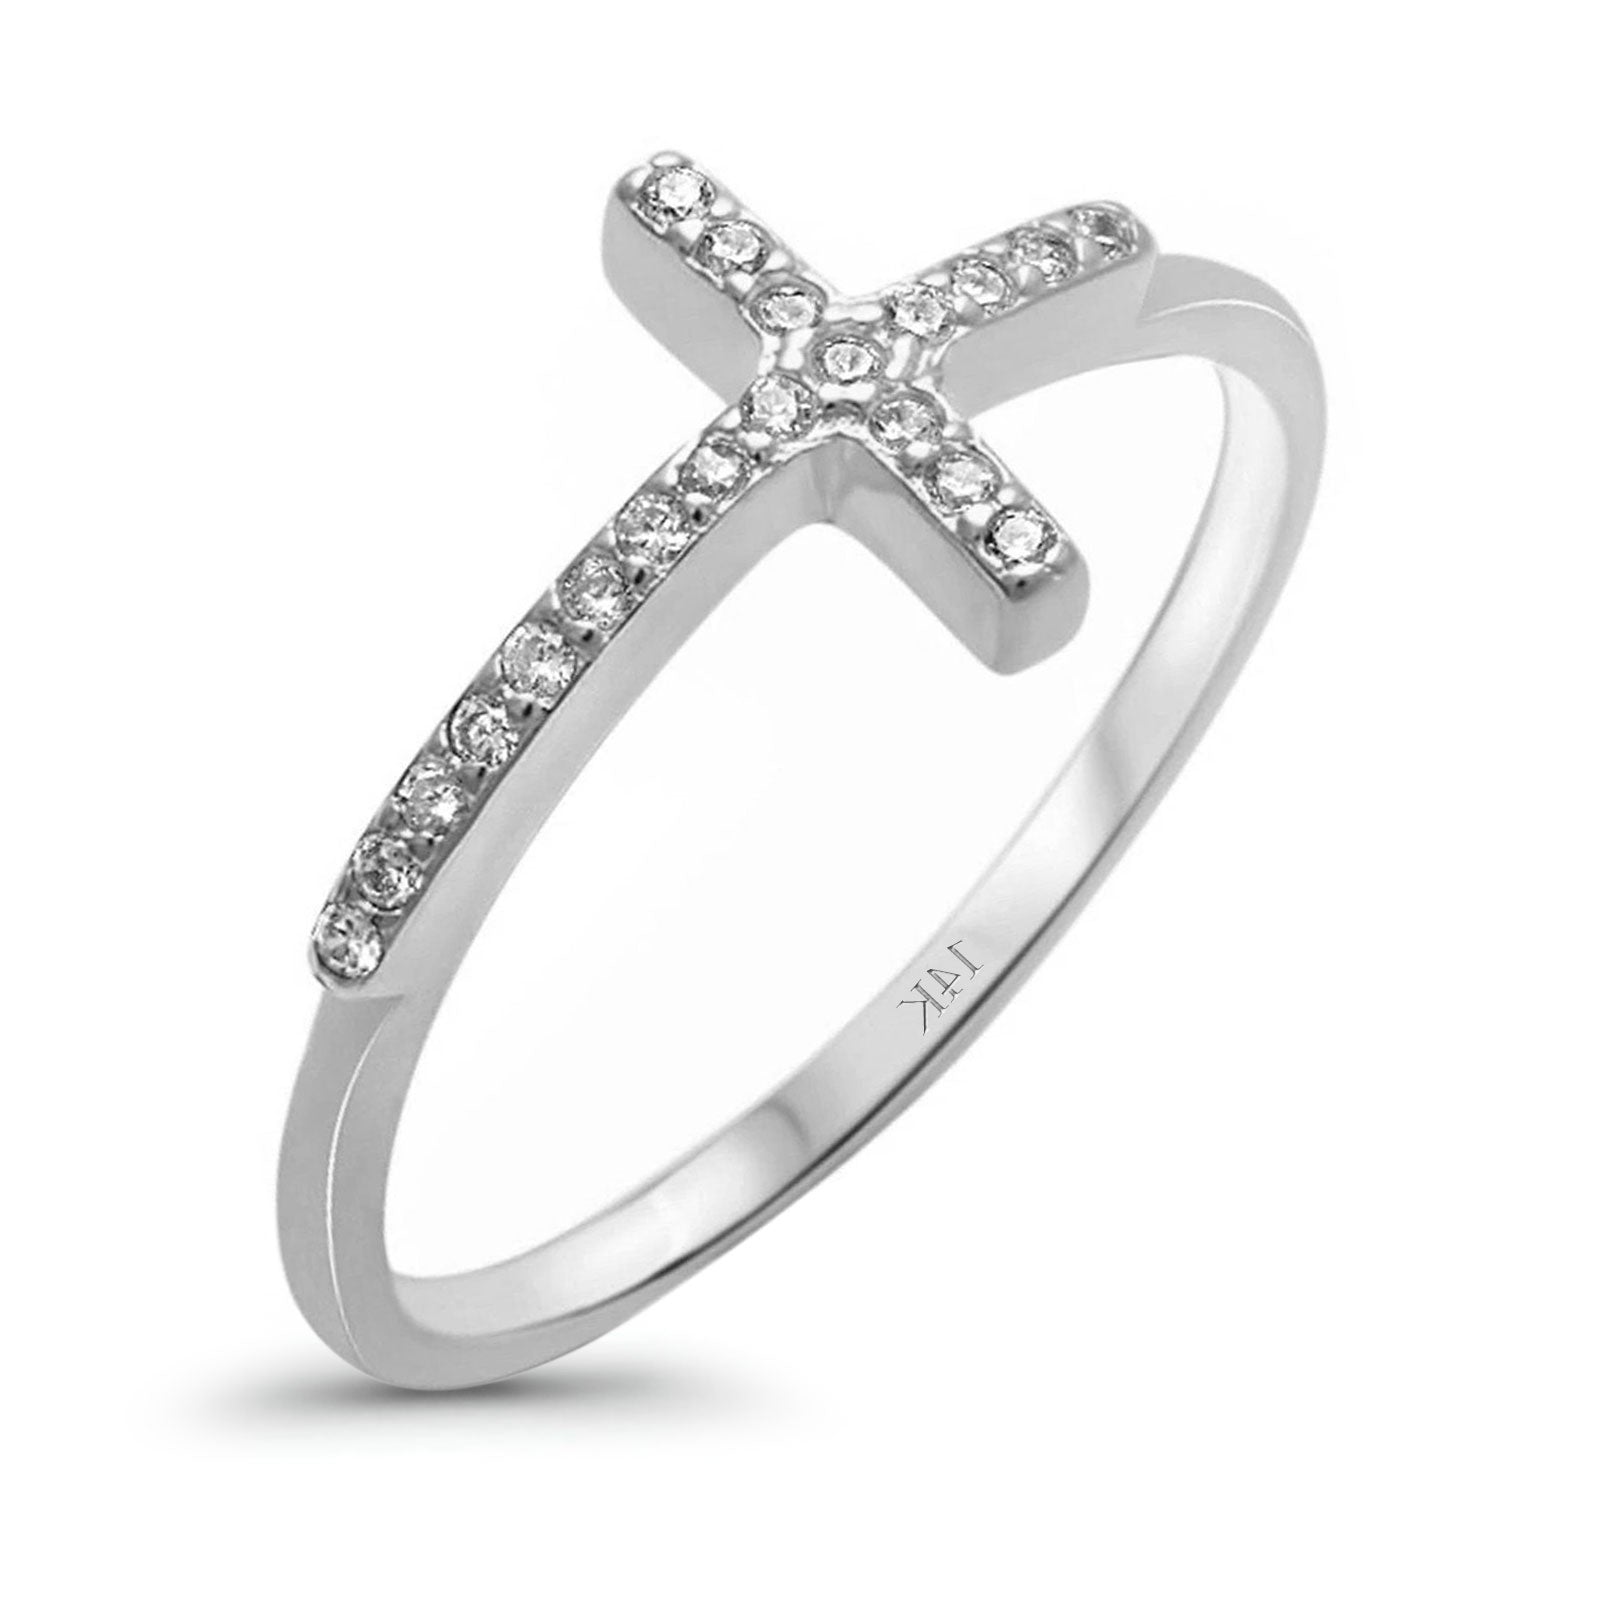 14K Gold Round Shape Sideways Eternity Simulated CZ Wedding Engagement Cross Ring